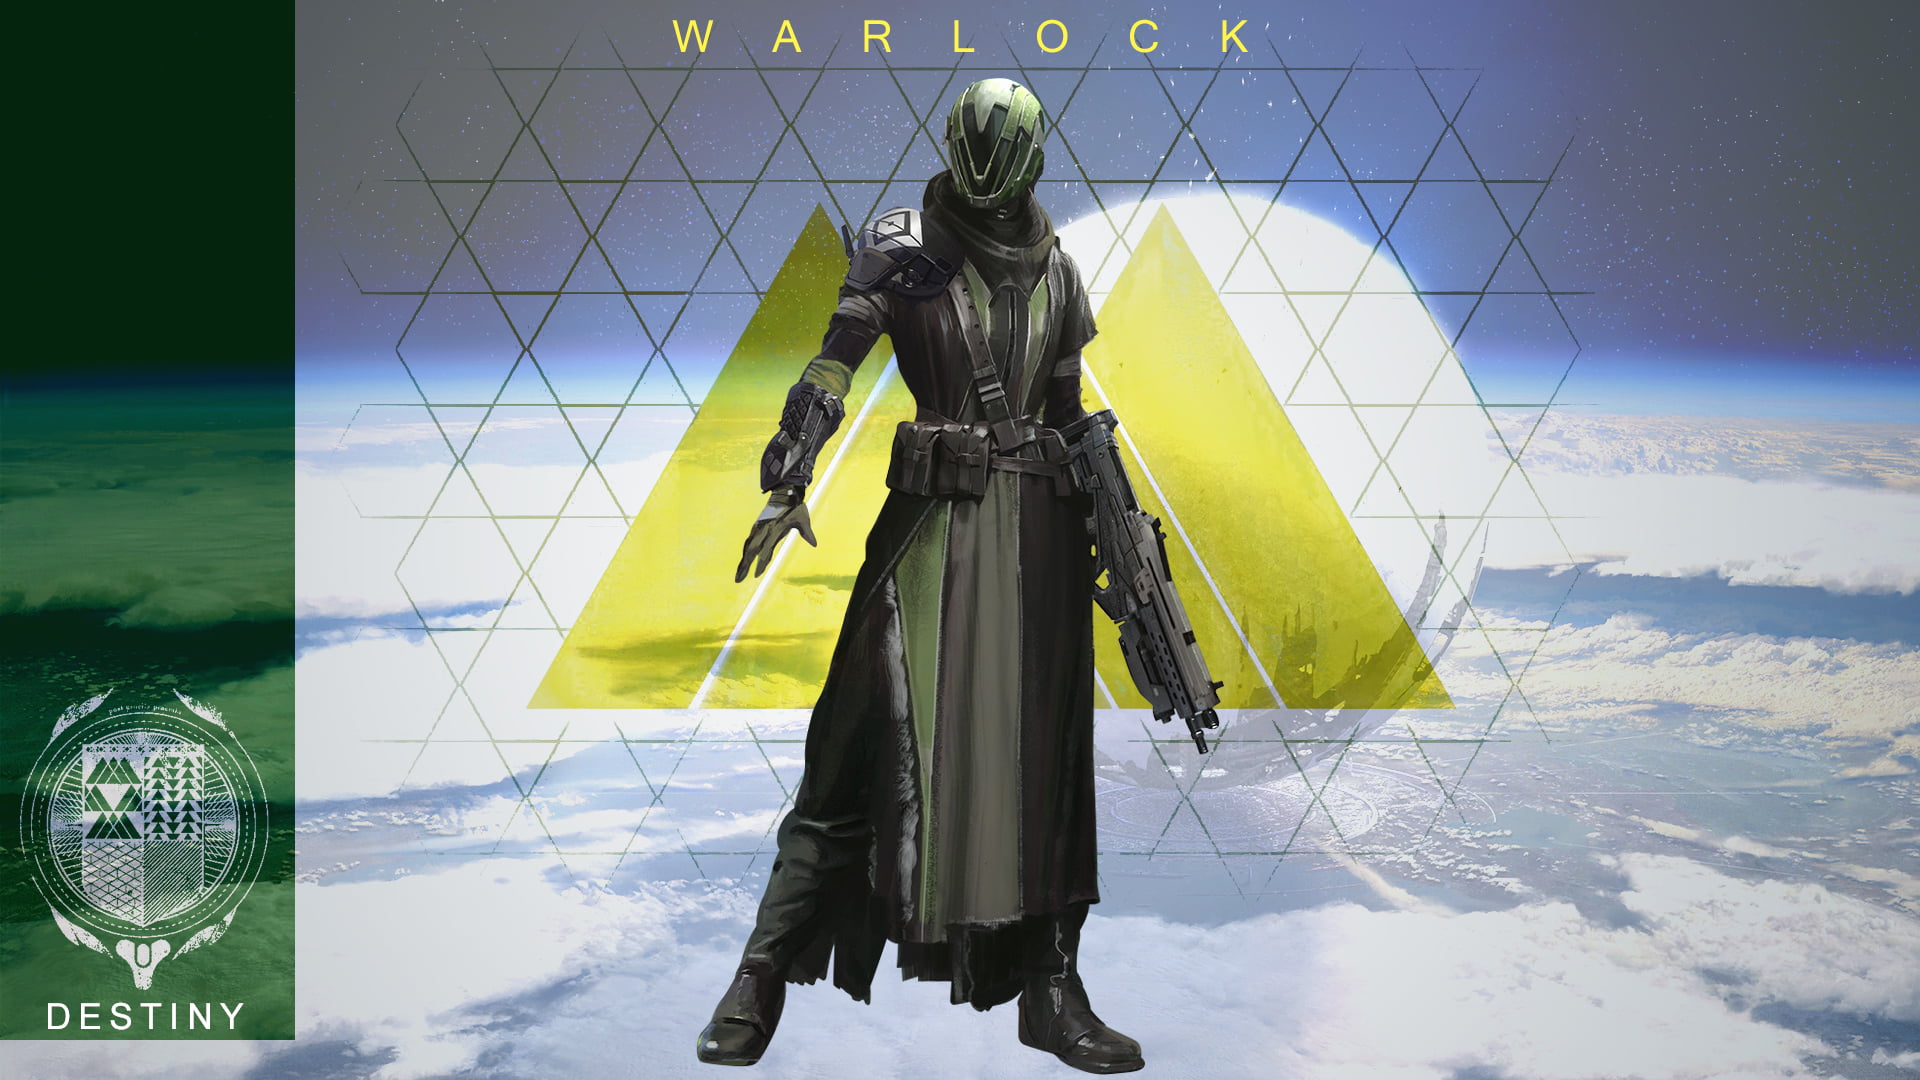 Warlock illustration, Destiny (video game), video games, weapon